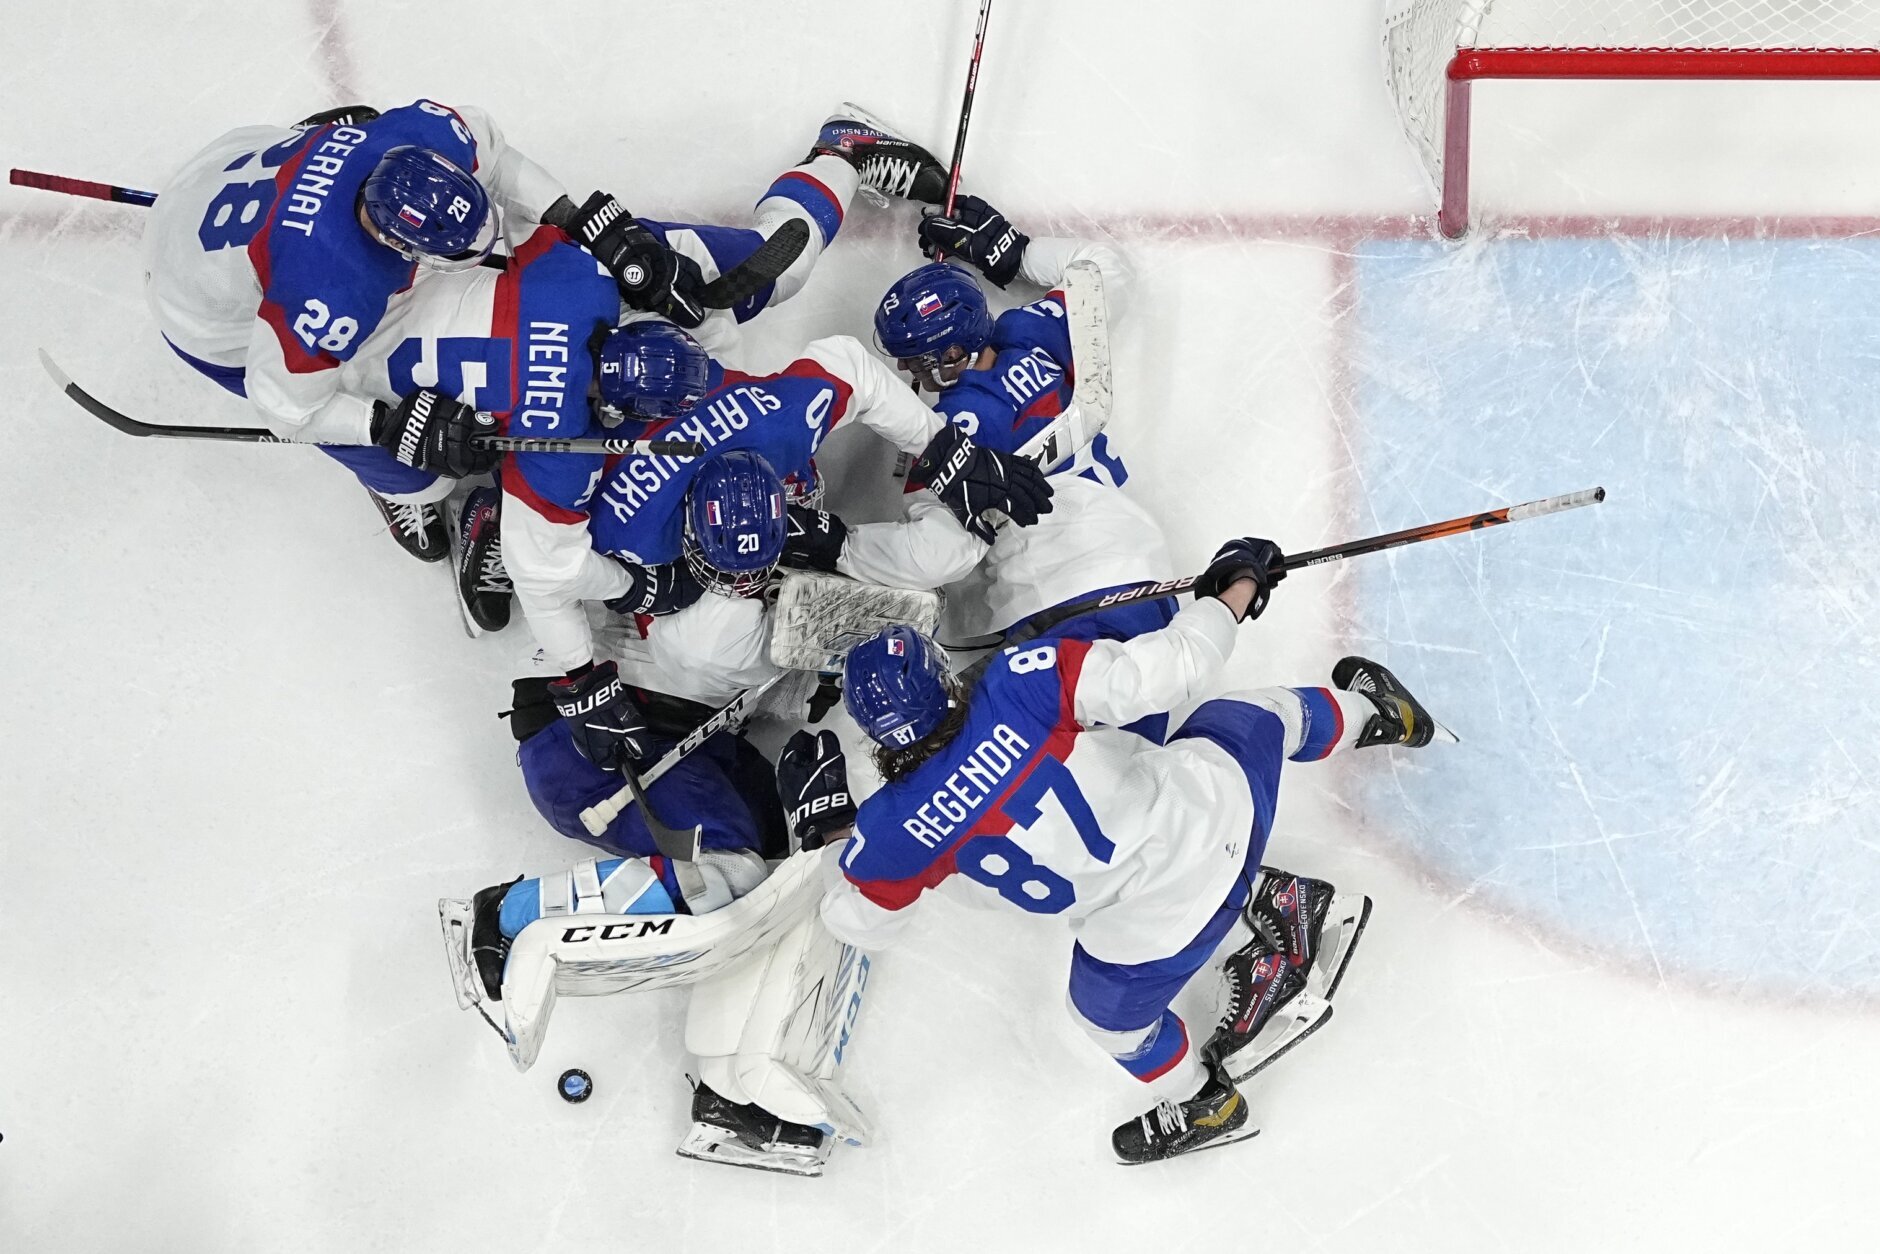 Slafkovsky, Nemec lead new Slovak hockey pros